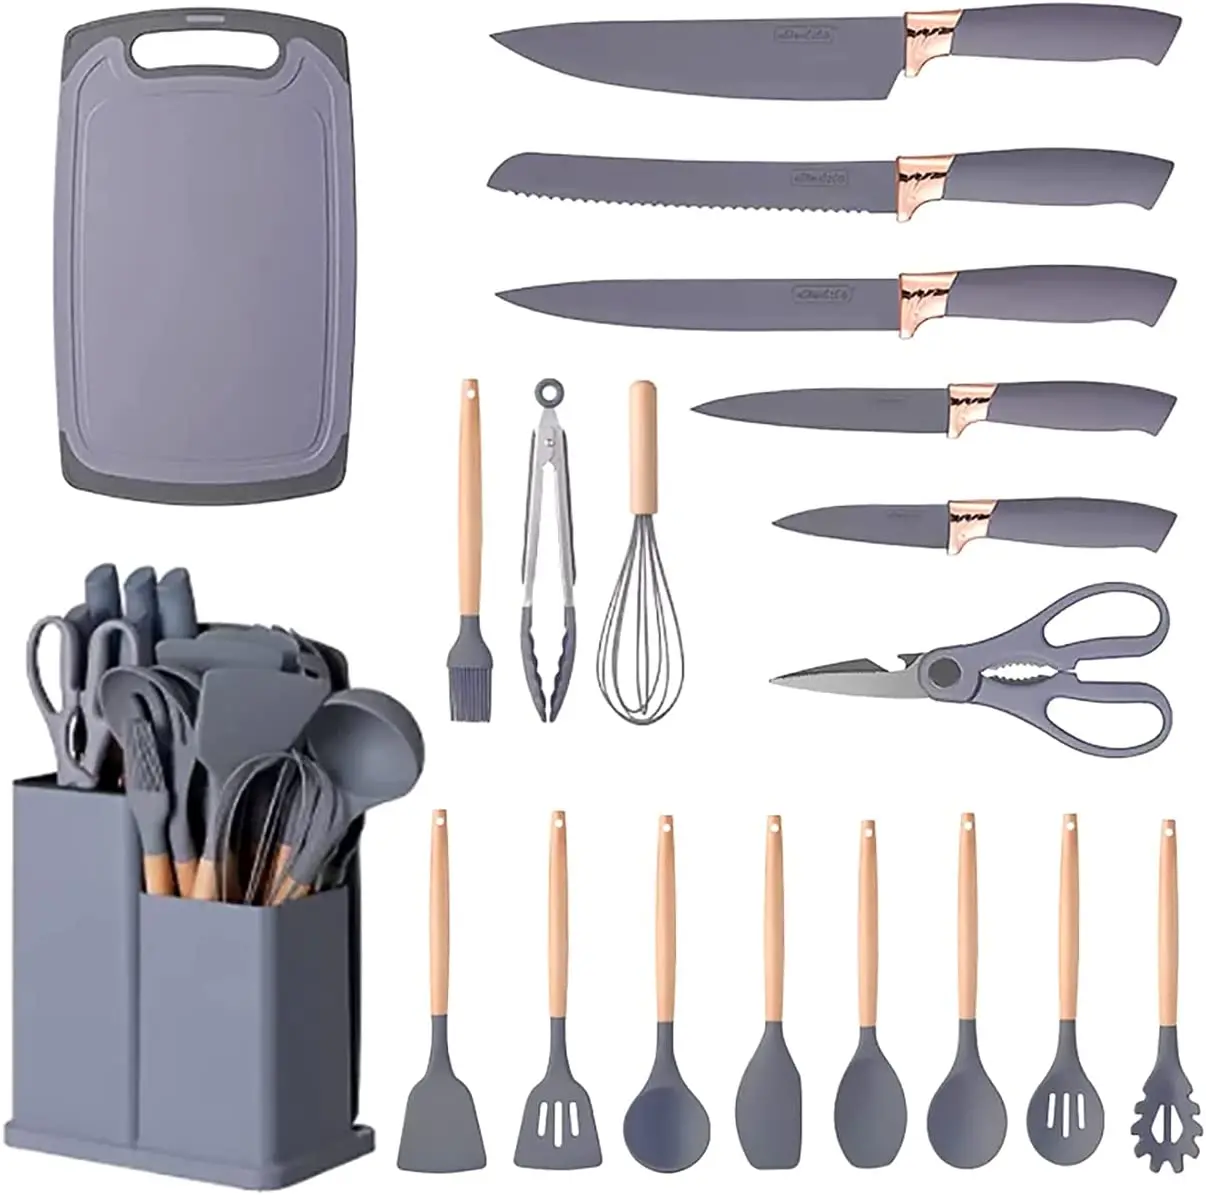 17 pieces Utensils Kitchenware Gadgets Sets Kitchen Accessories Kitchenware Cooking Tools with stainless steel Kitchen knife